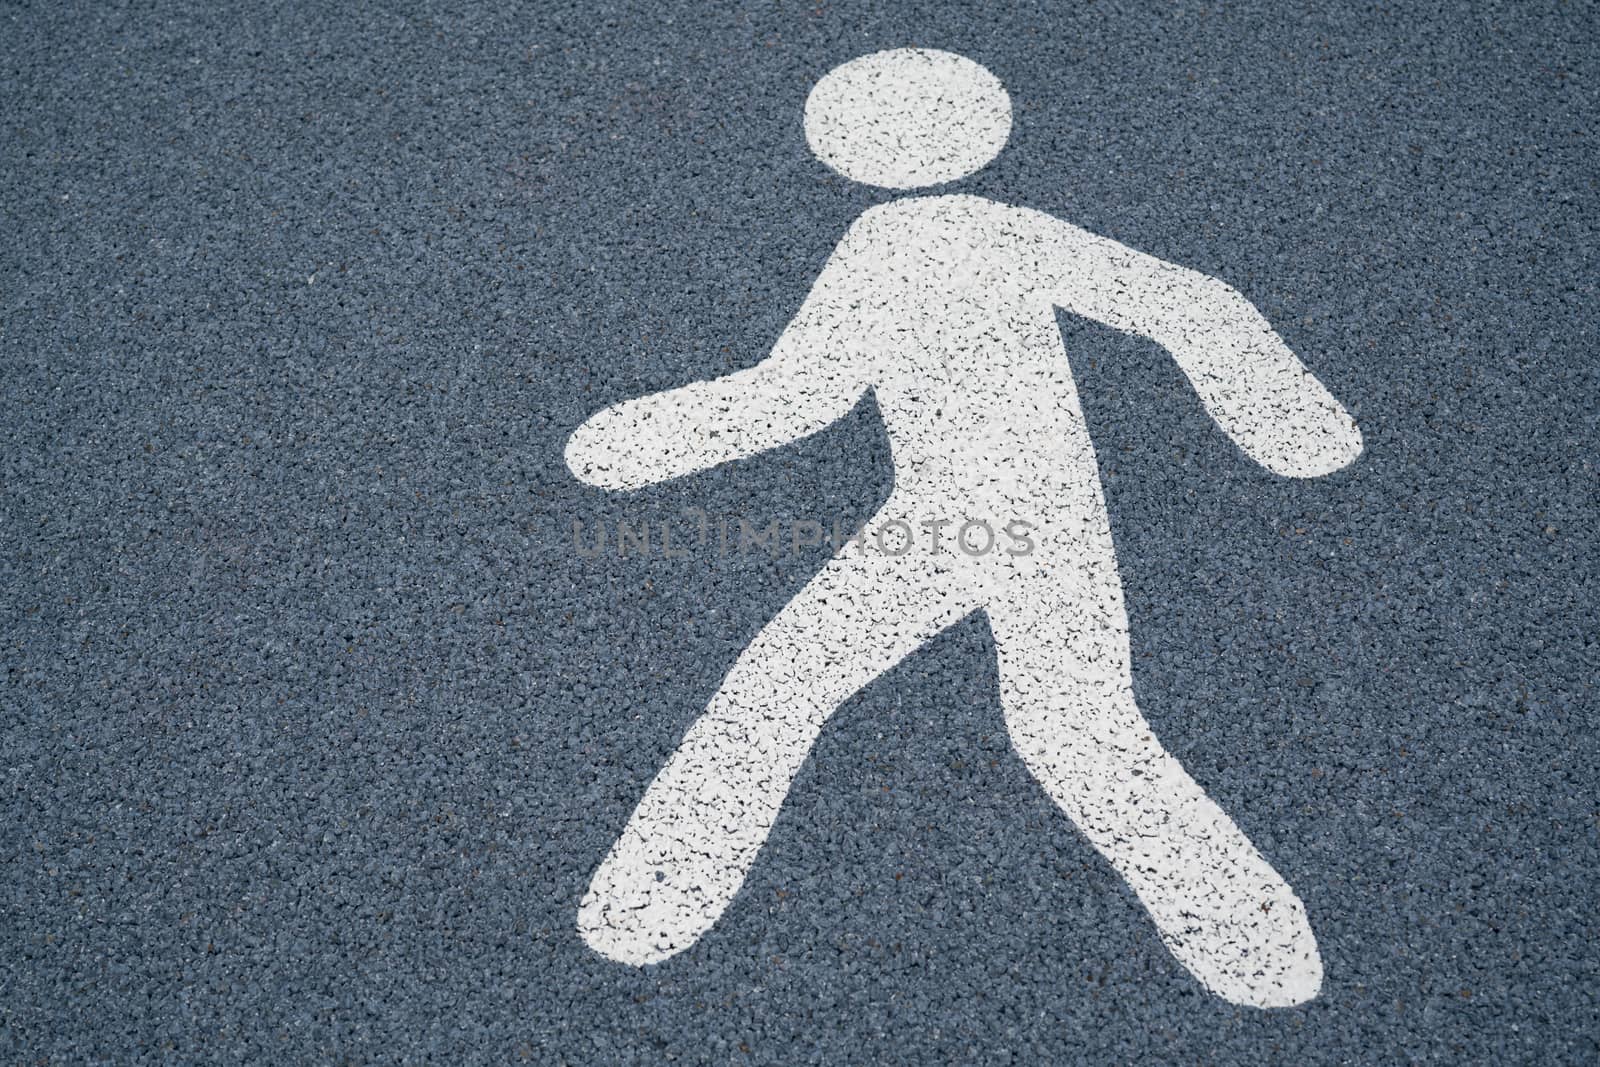 Walk sign, pedestrian street sign on a wet dark asphalt floor